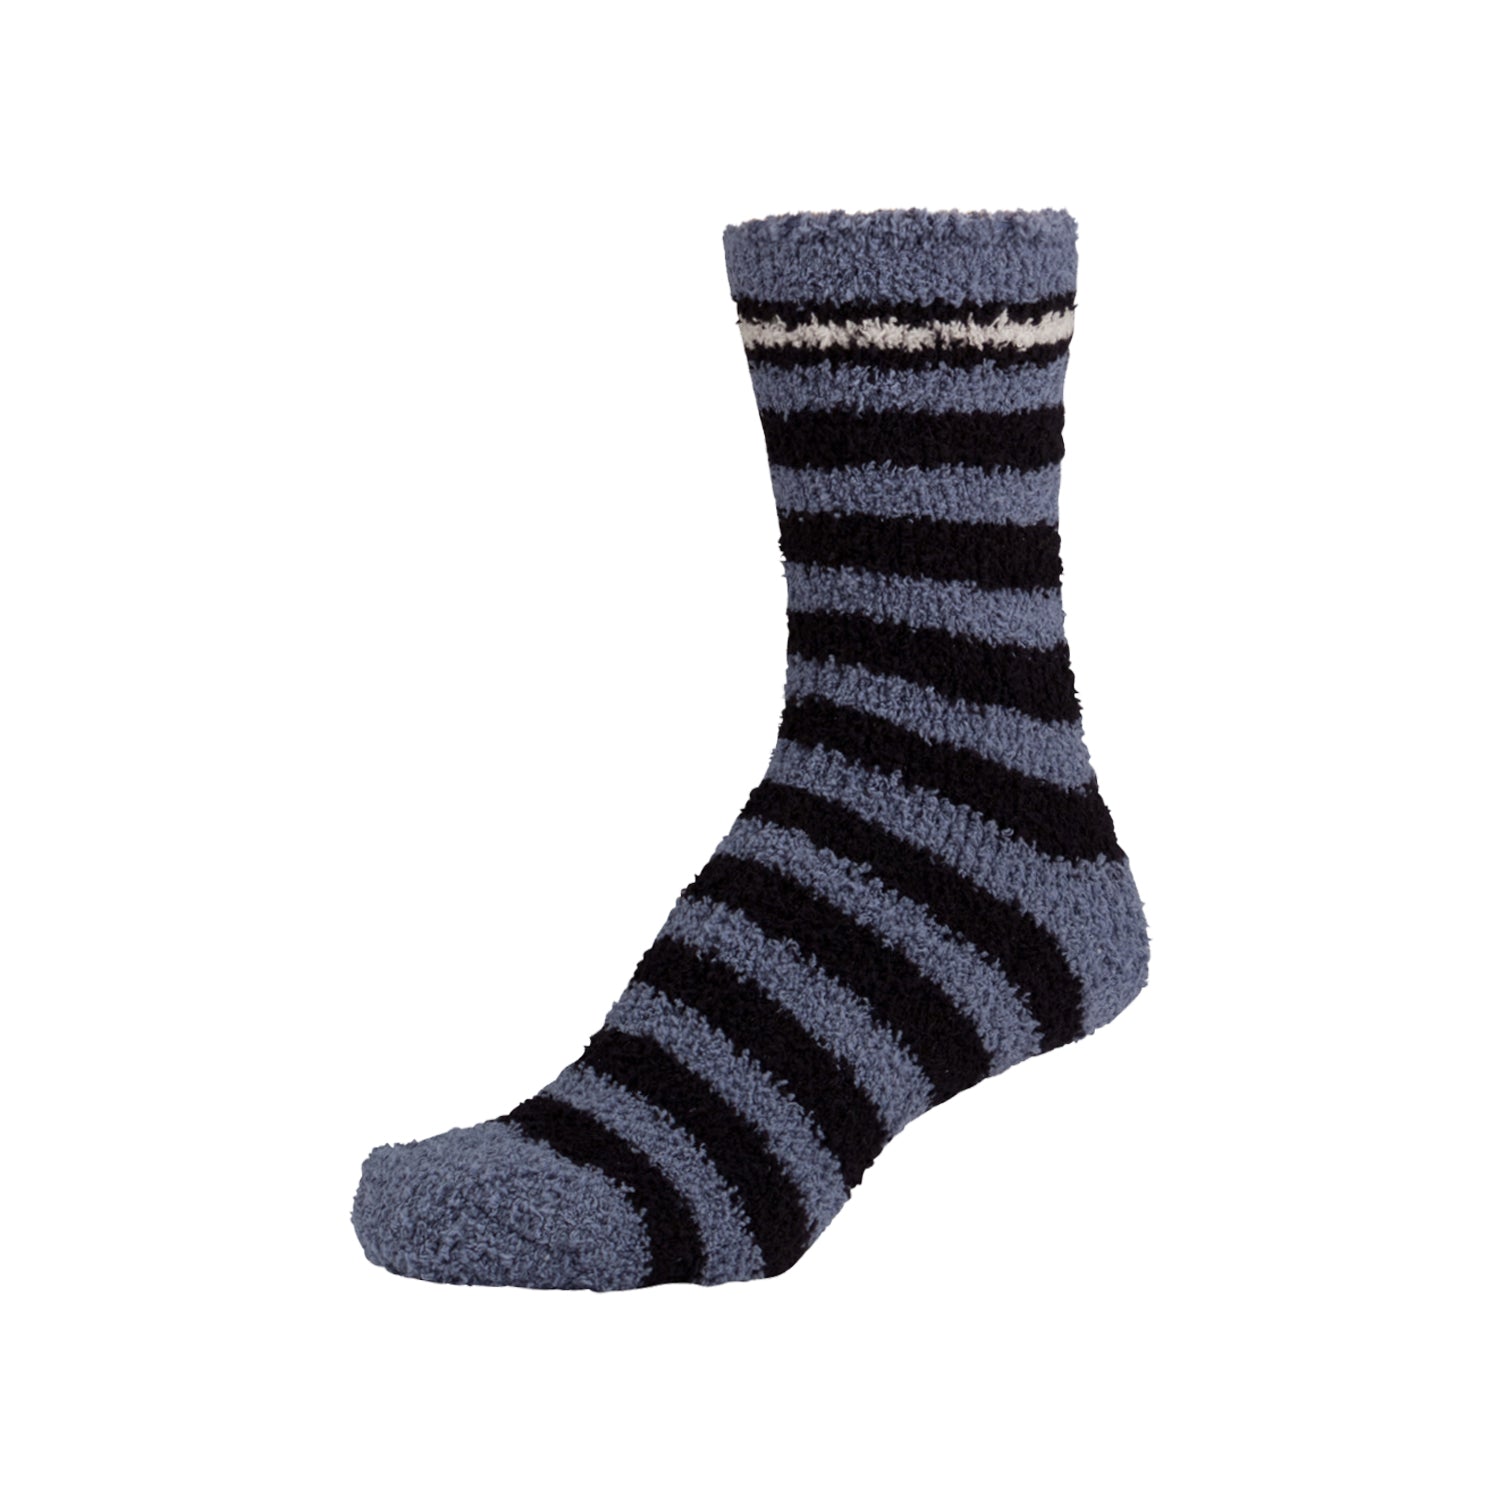 6 Pairs of Women's Fuzzy Soft Slipper Socks with Stripes, Size 9-11 –  Brooklyn Socks